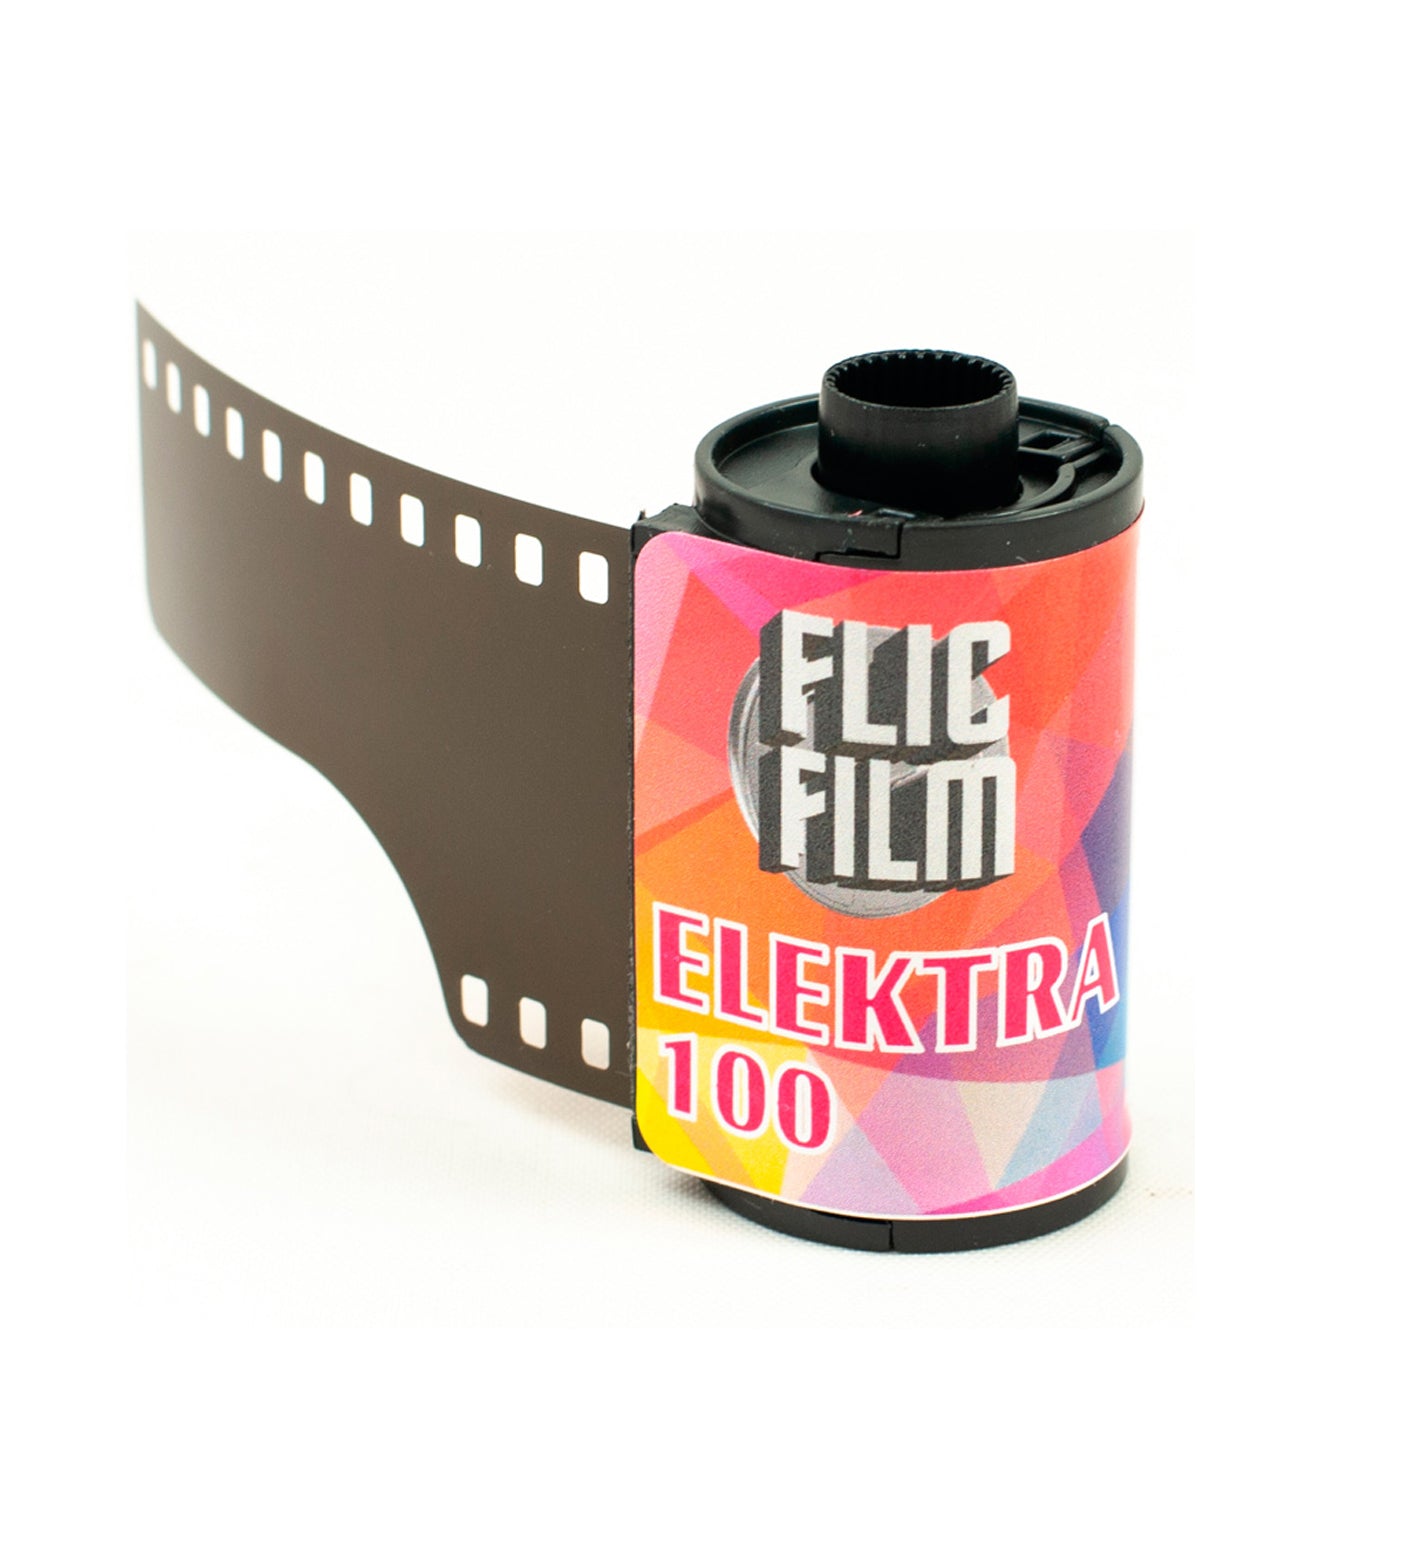 Flic Film Elektra 100 35mm Film 36 Exposures (£13.99 incl VAT)